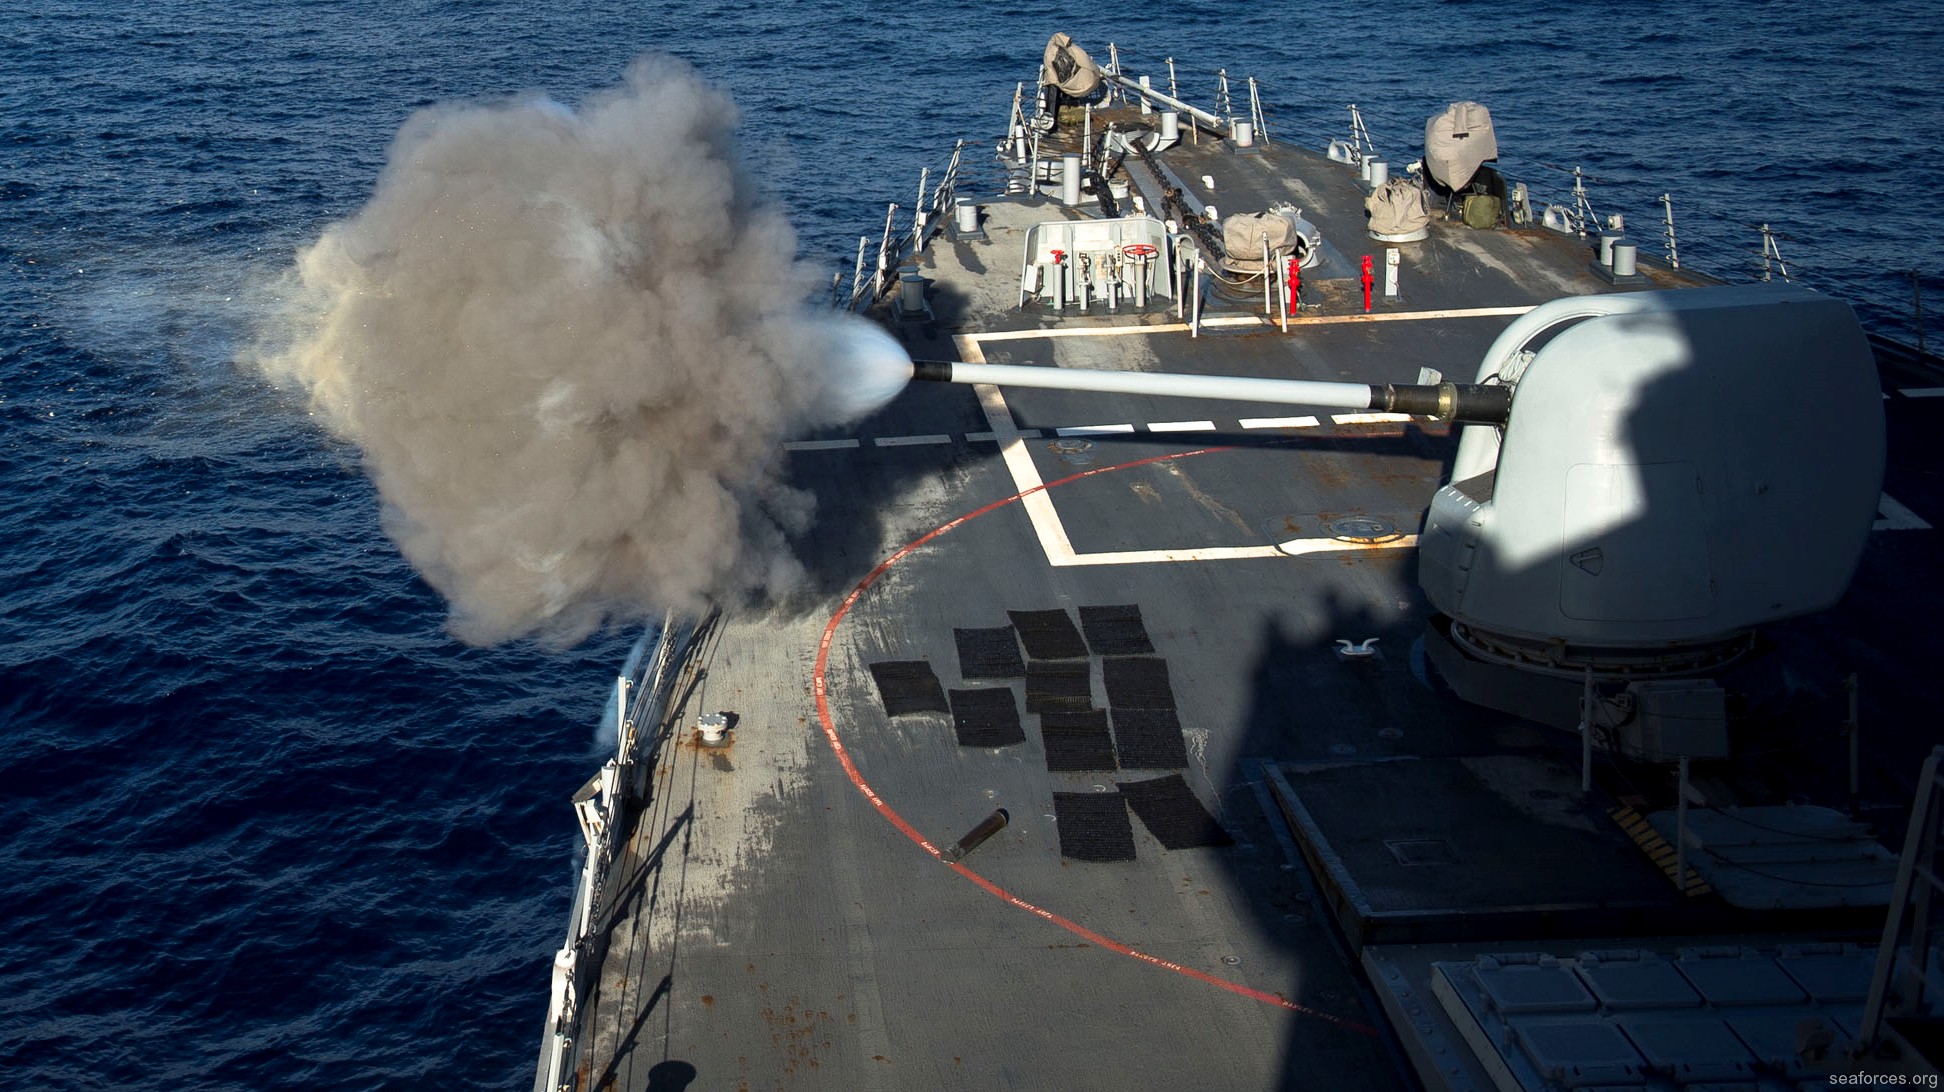 ddg-51 uss arleigh burke destroyer us navy 18 mk-45 gun fire exercise